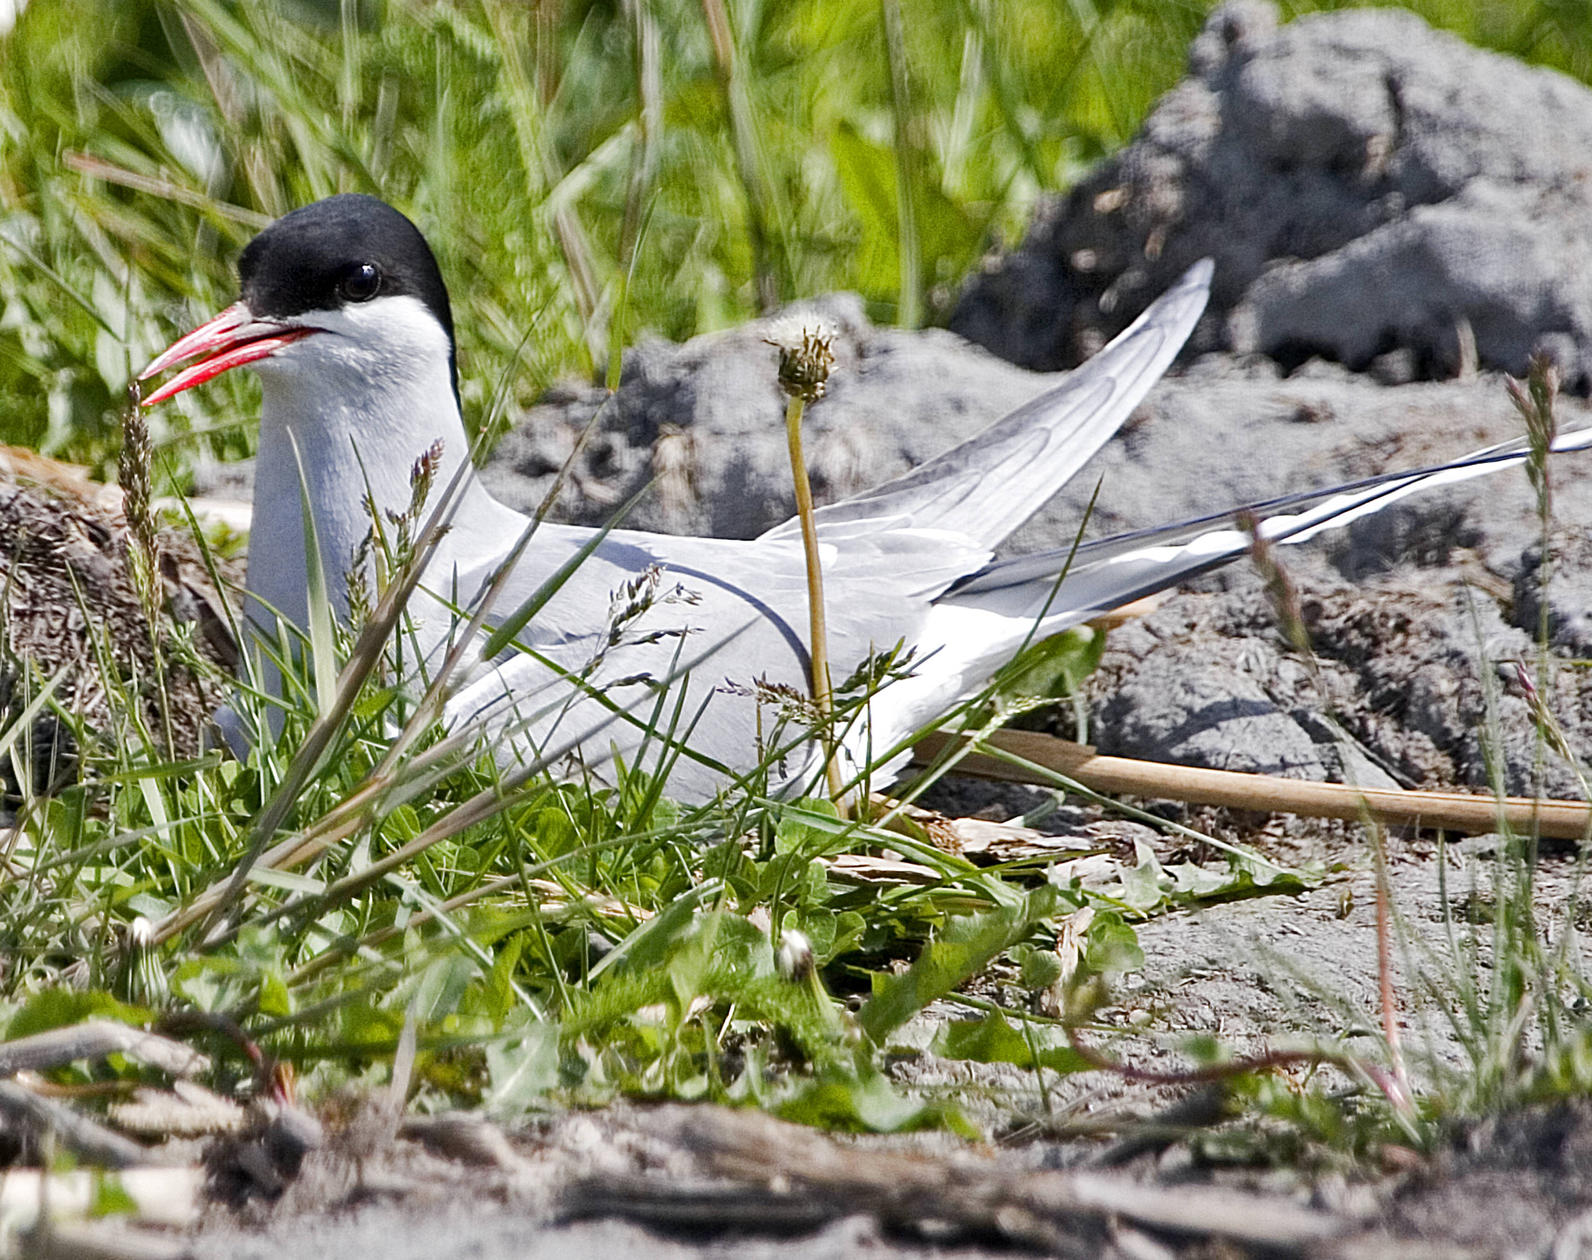 Arctic Tern.